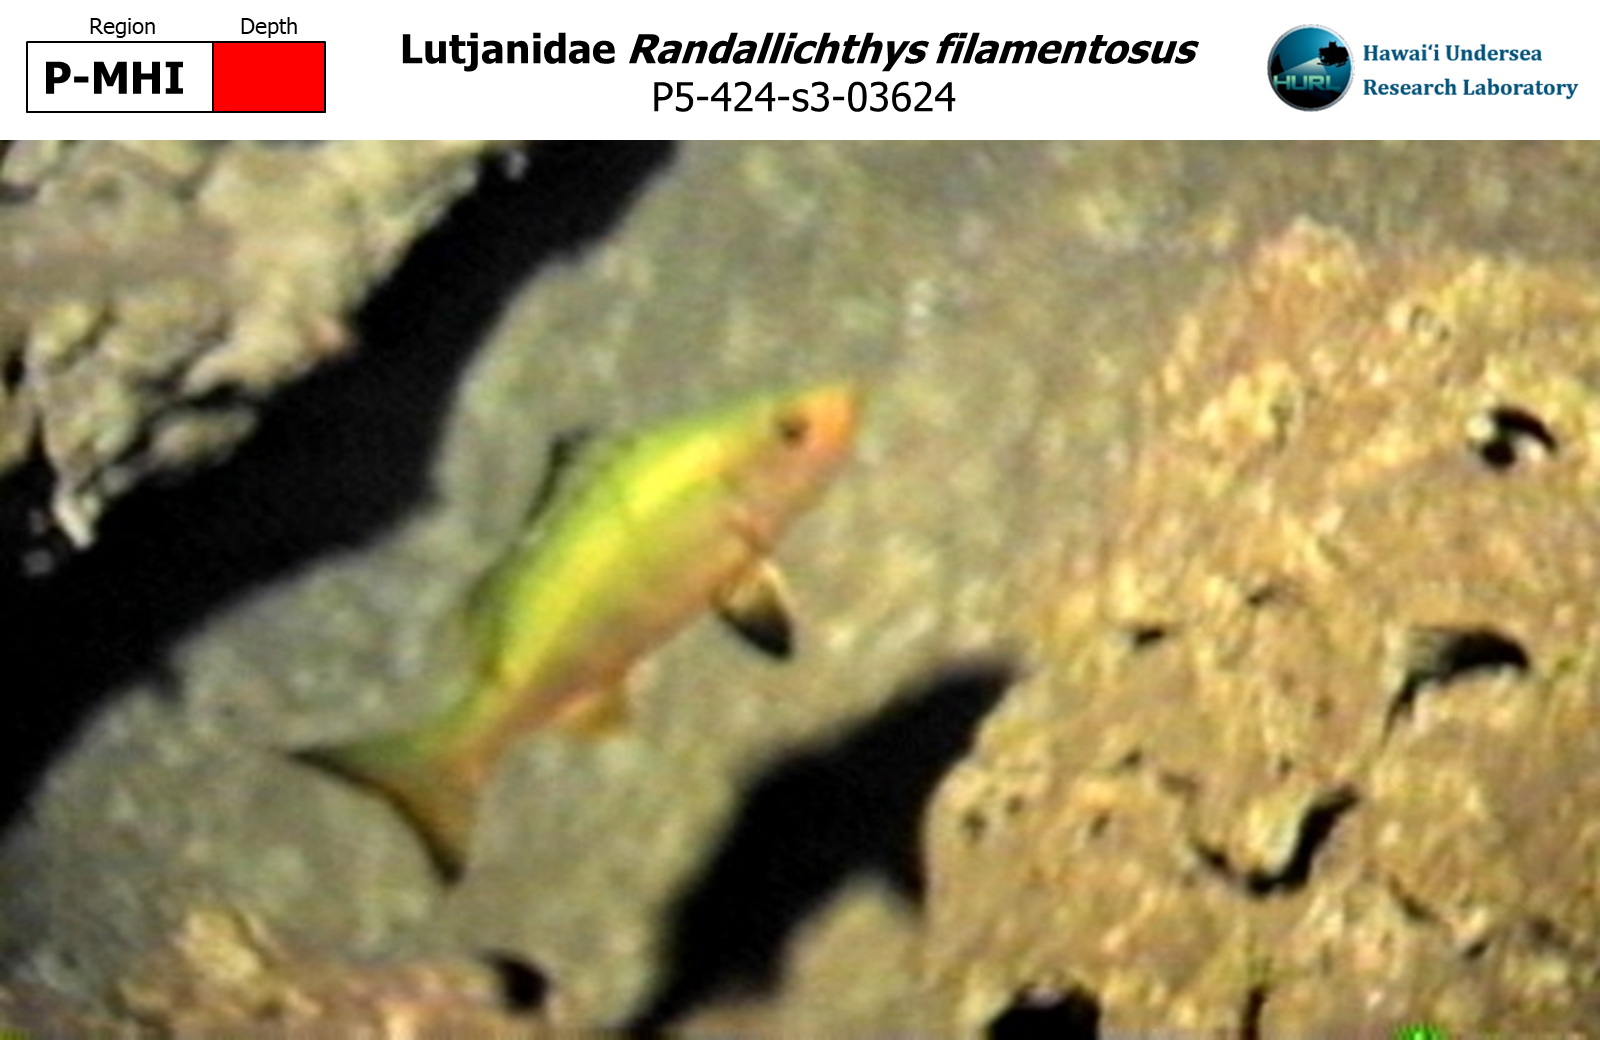 Randallichthys filamentosus